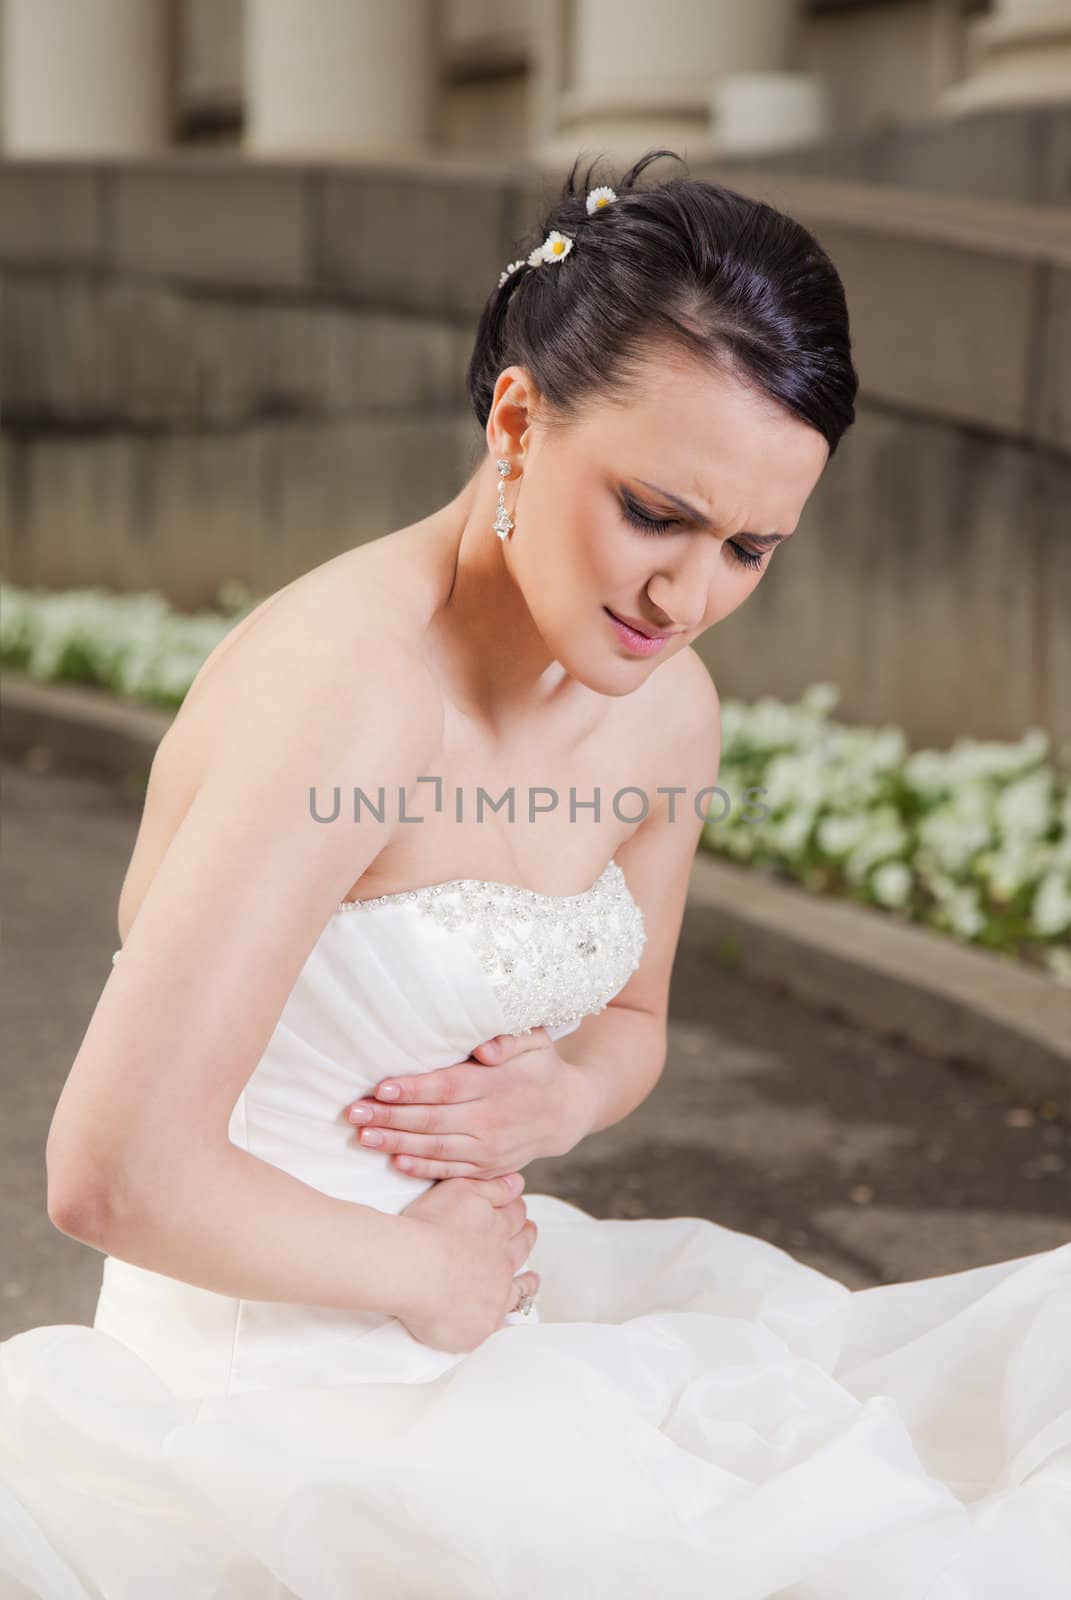 Bride with wedding dress sitting, having stomach ache